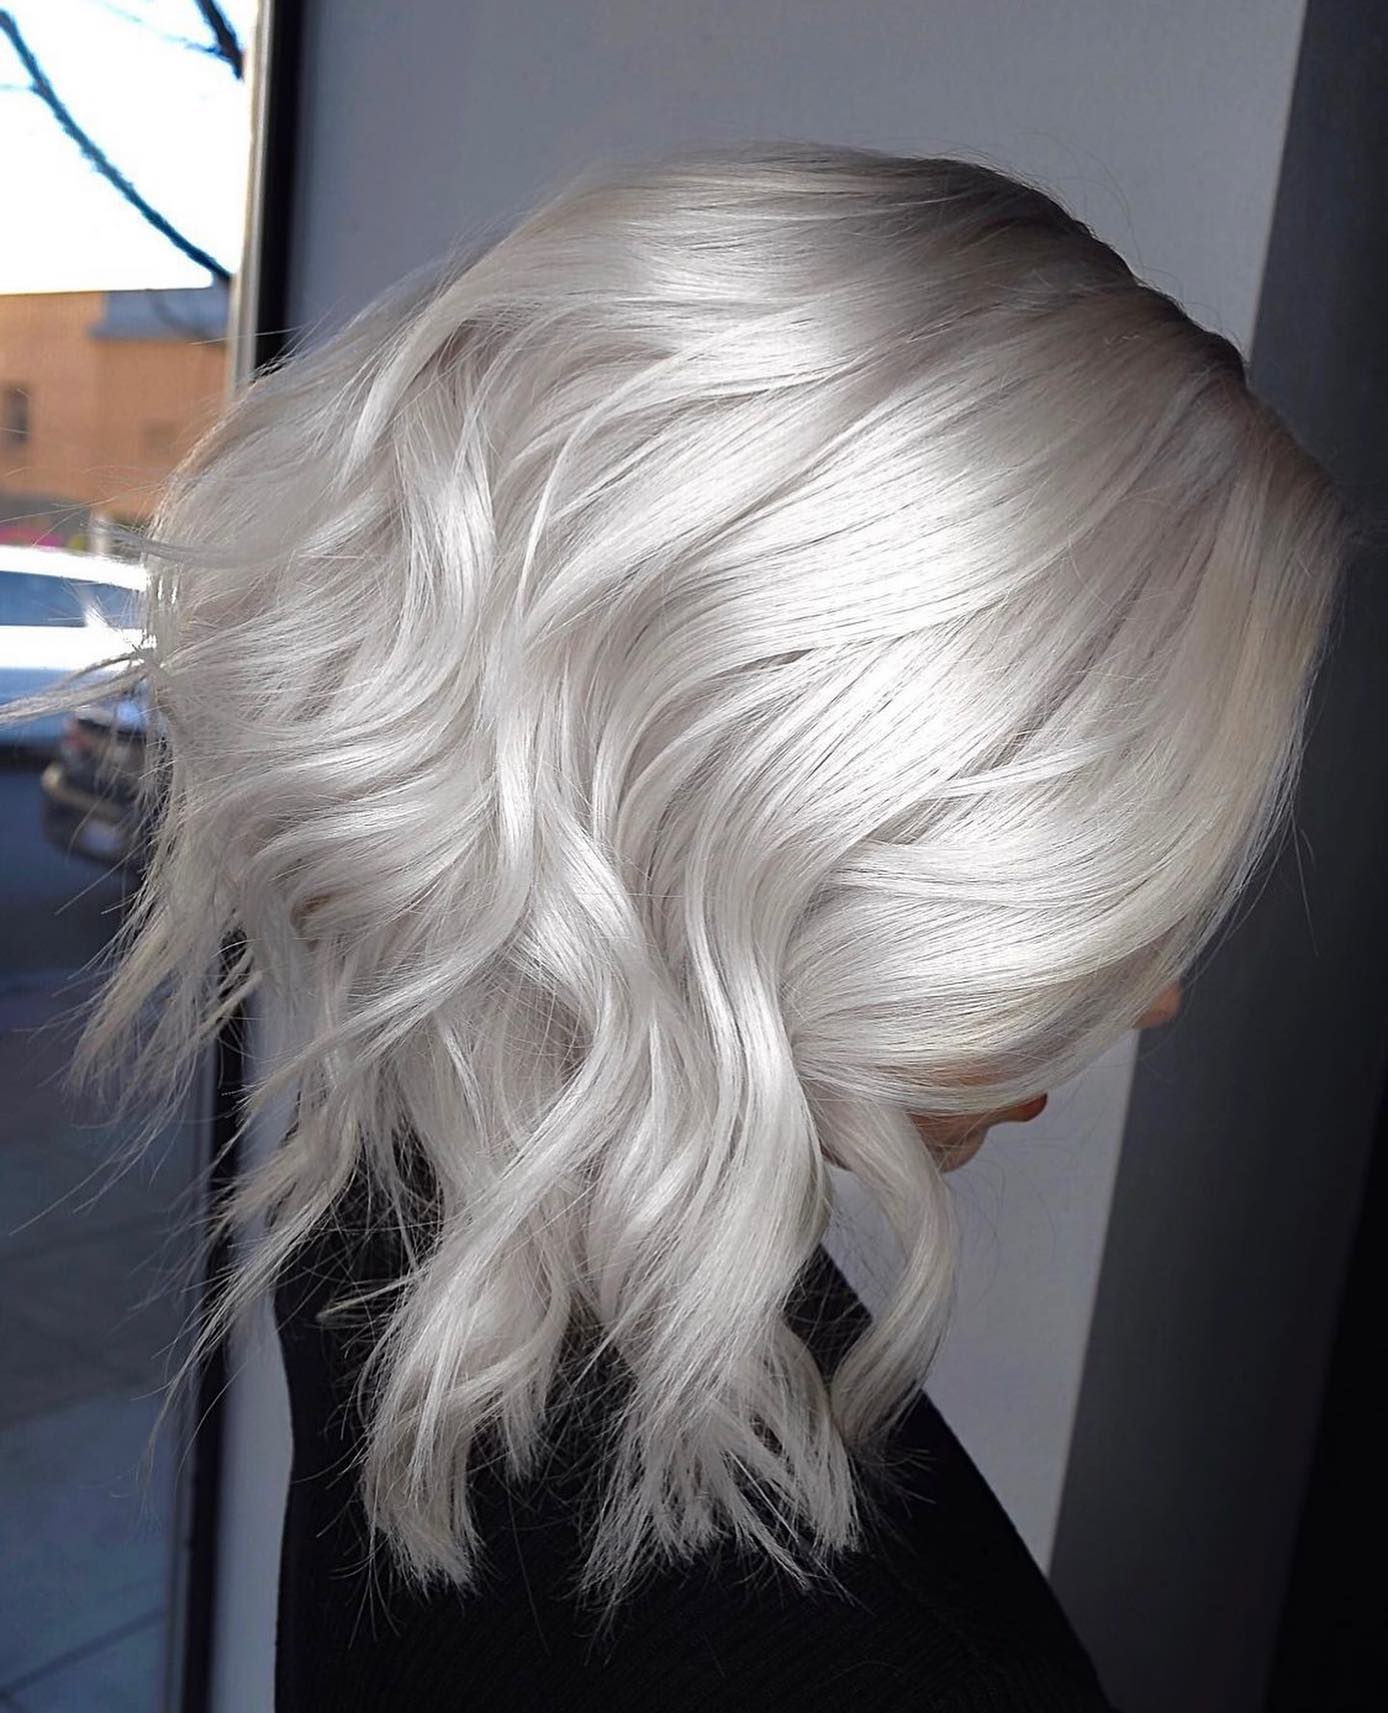 Colouring blondes: 30 bold, elegant options